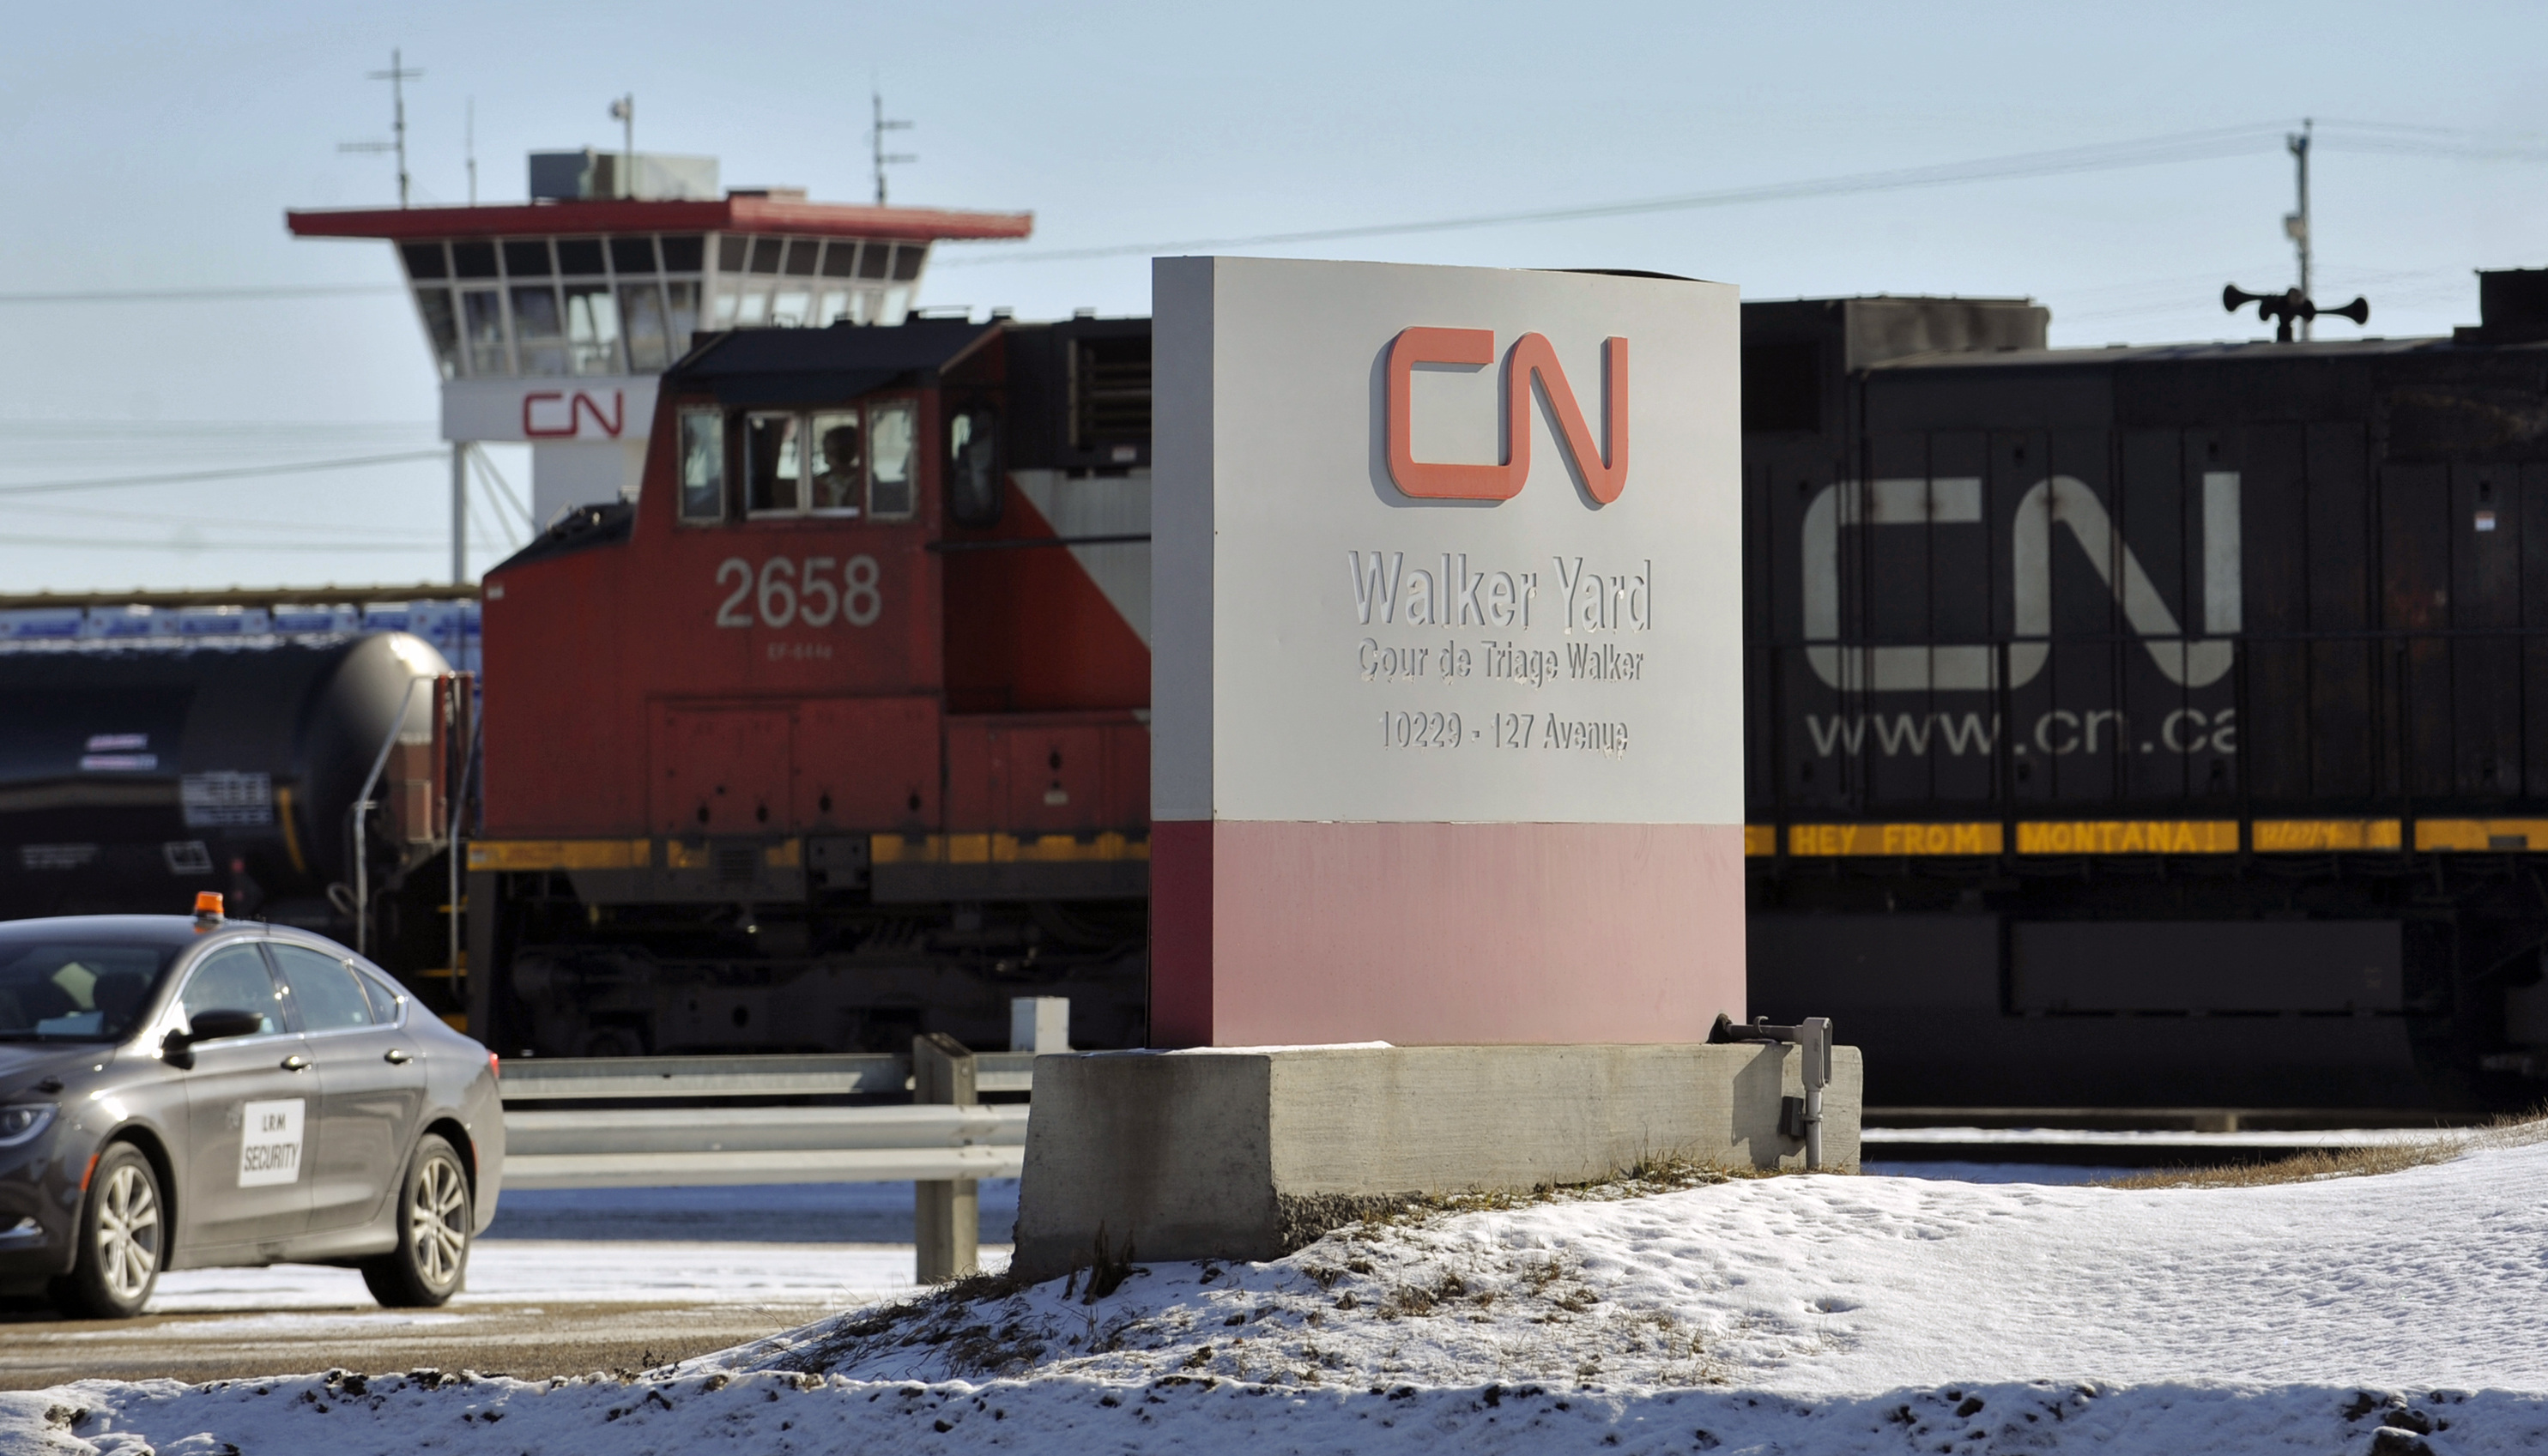 A locomotive moves through the CN railyards in Edmonton